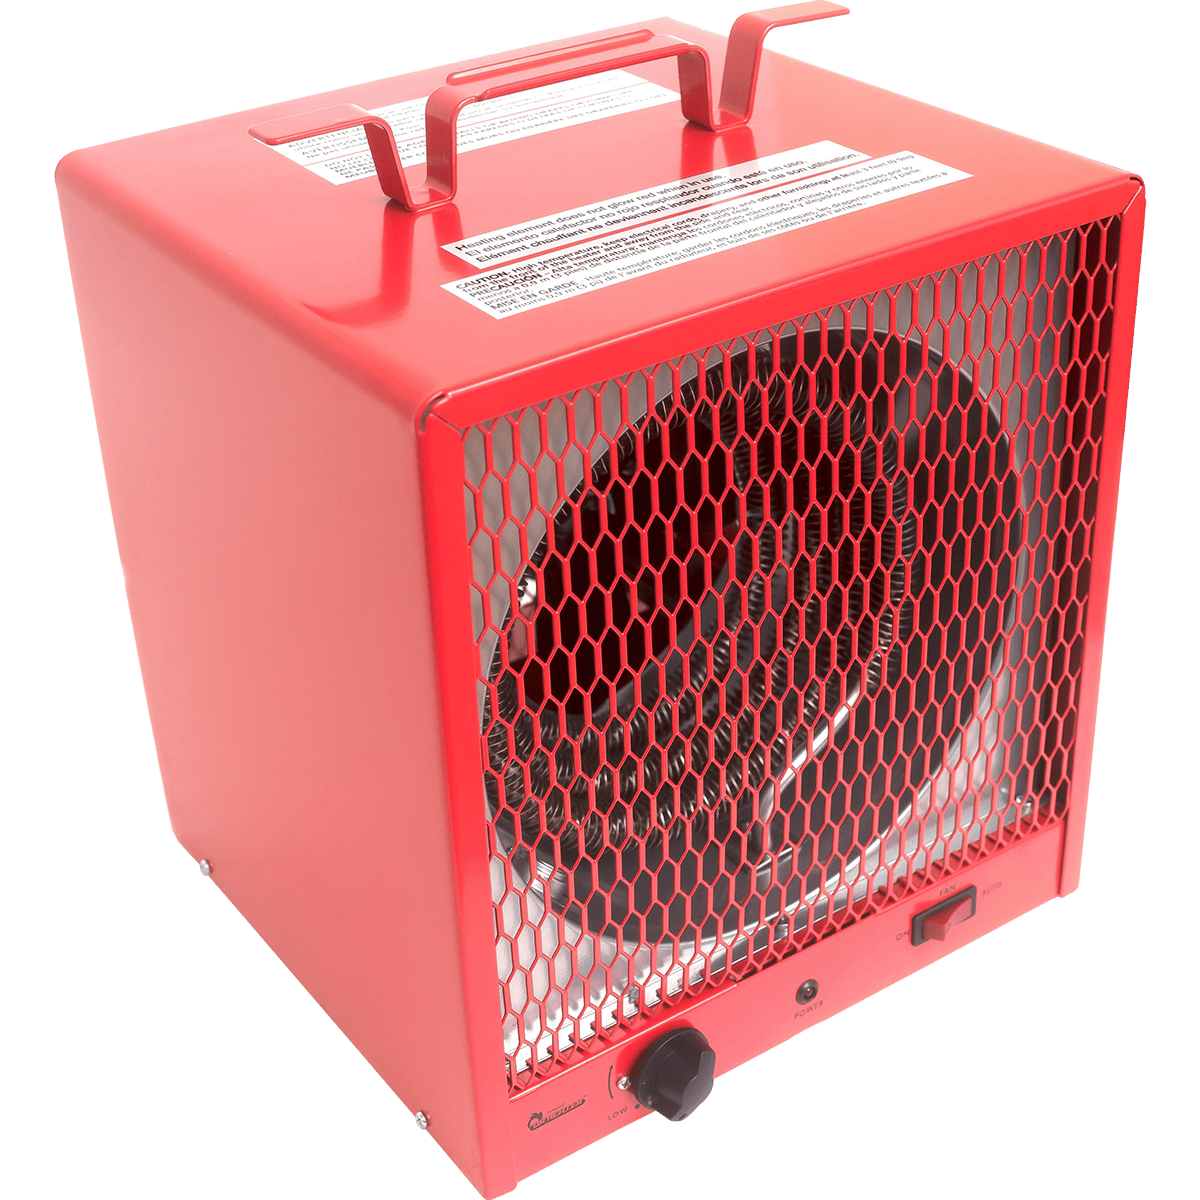 Fahrenheat WHT500 Utility Heater, Medium, Off- White - Well Heater